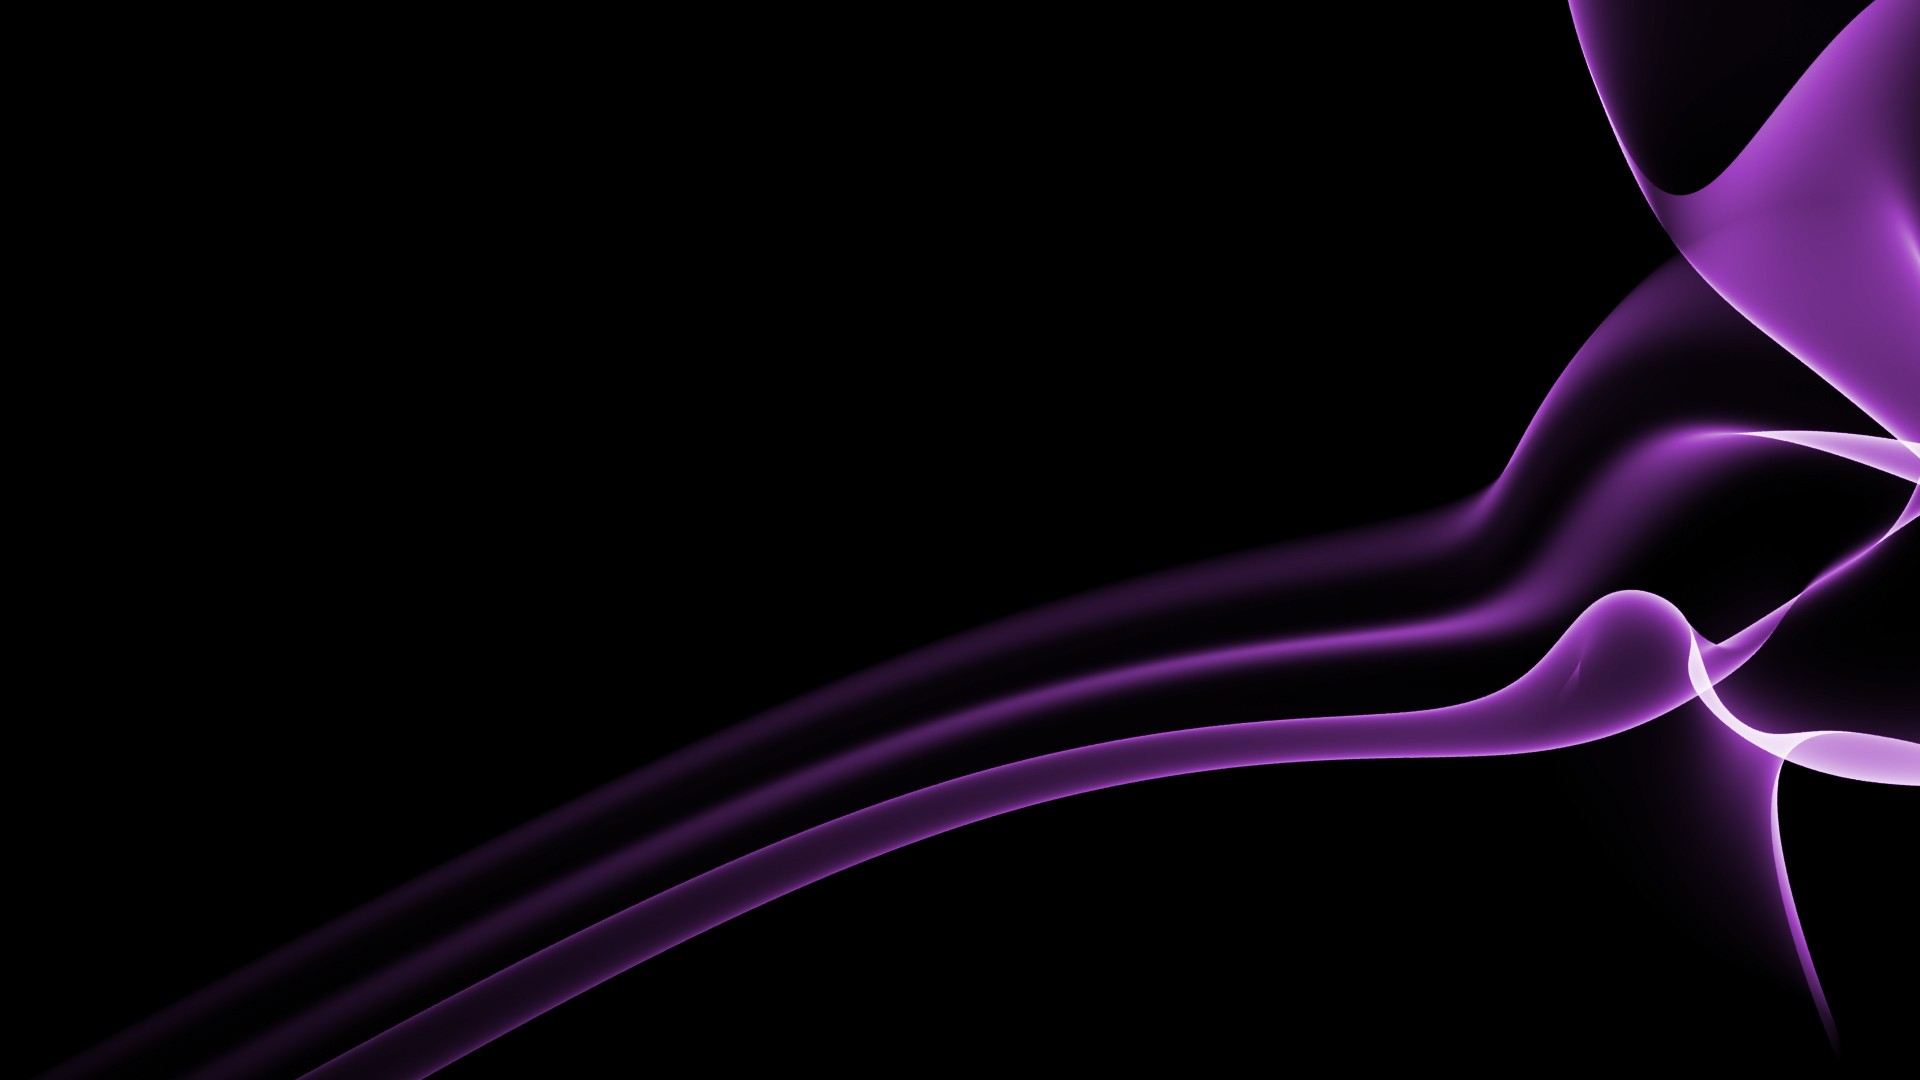 exclusive purple abstract desktop photos free download